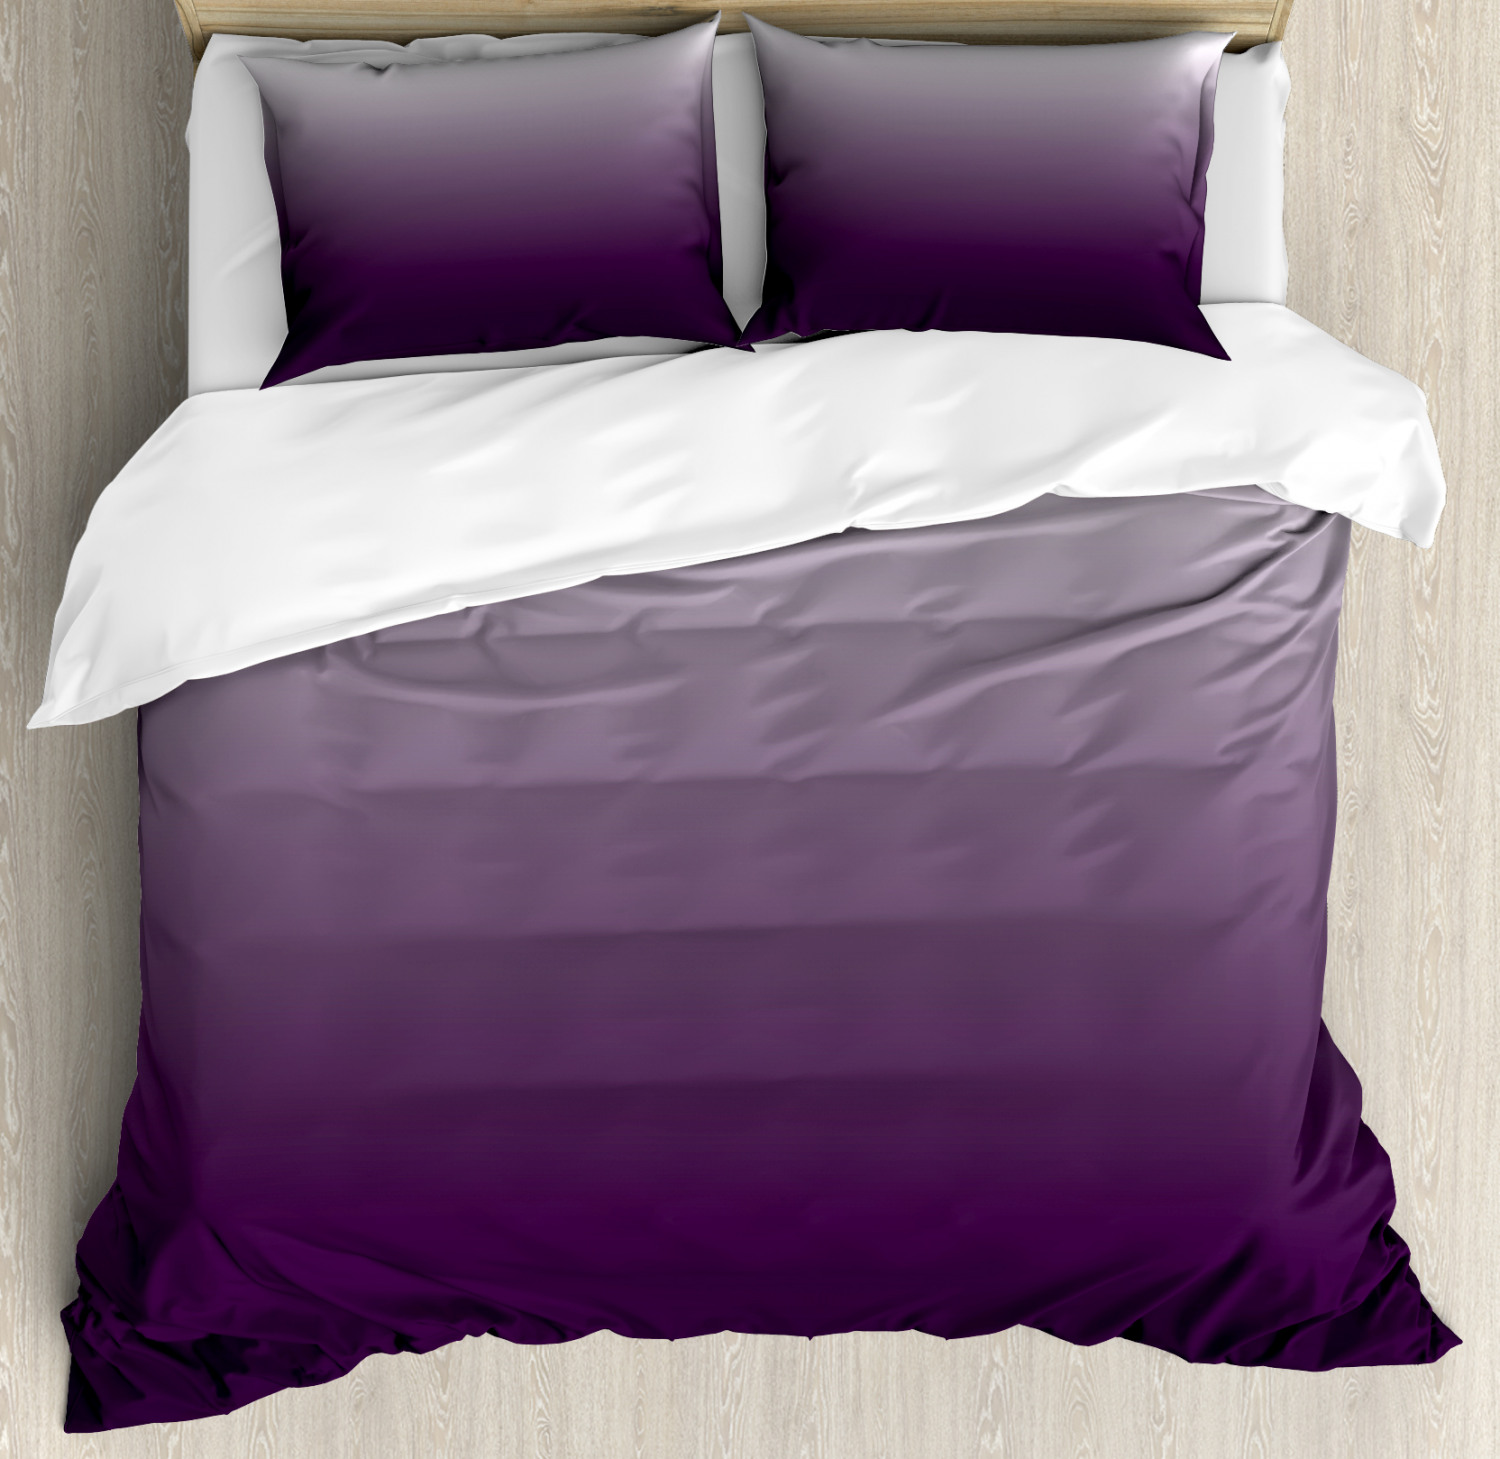 Aubergine Duvet Cover Set With Pillow Shams Ombre Print Ebay